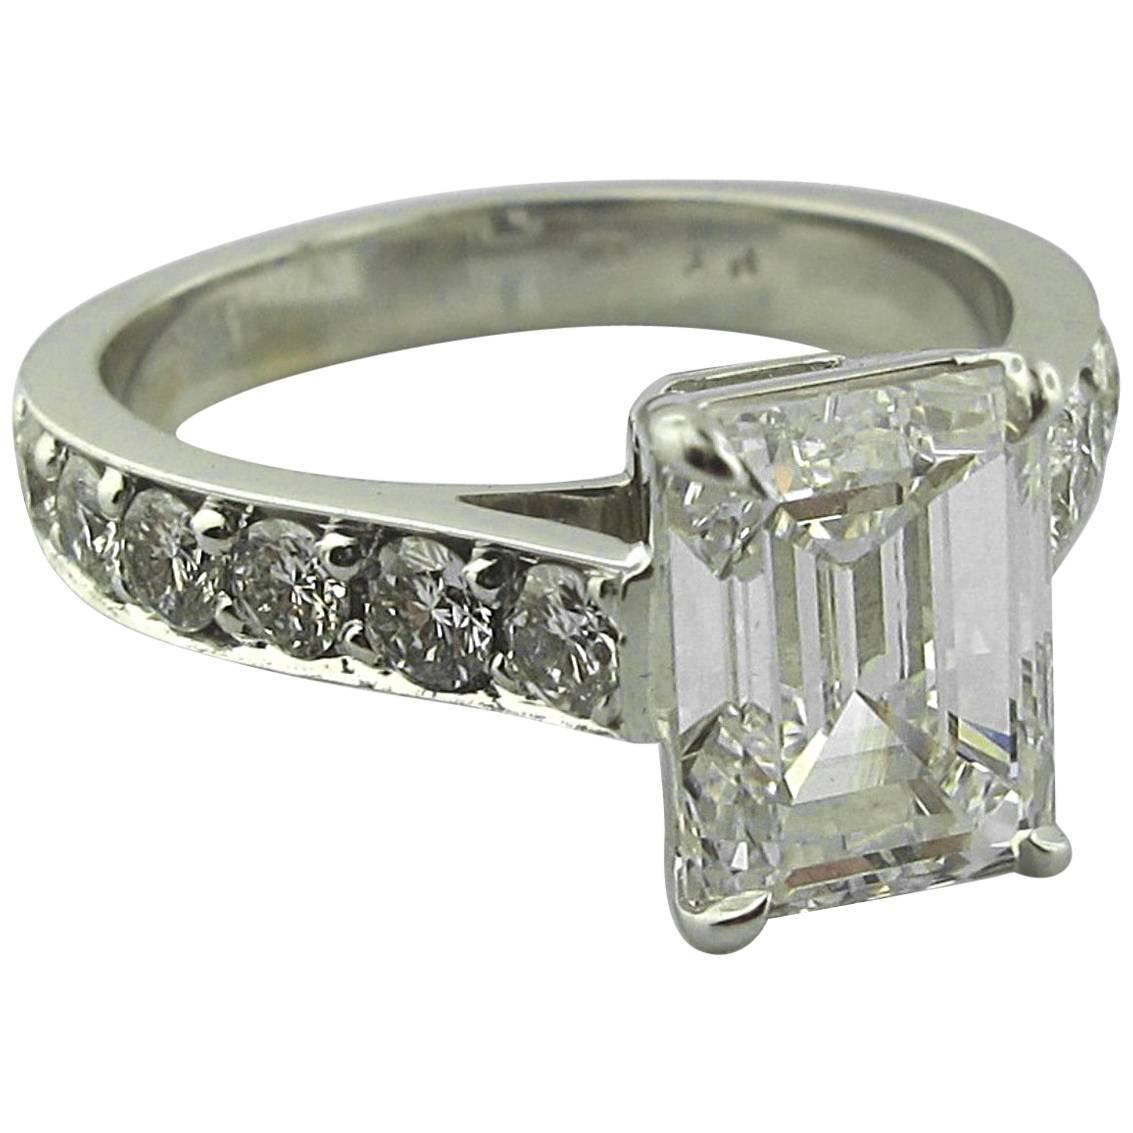 GIA Certified 3.01 Carat Emerald Cut Diamond Ring, E color, in Platinum